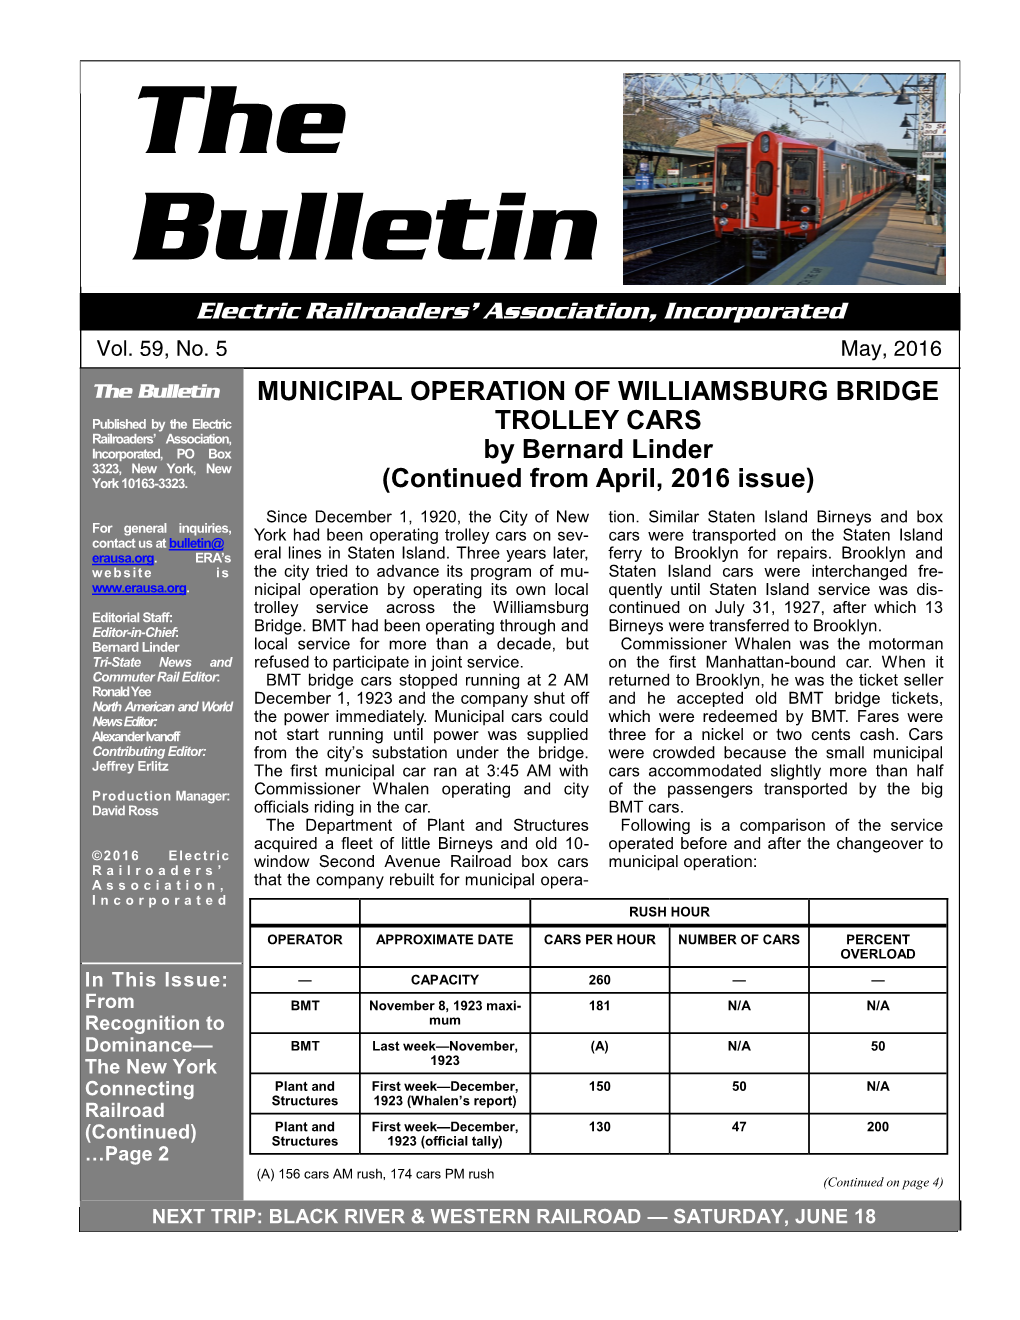 The Bulletin MUNICIPAL OPERATION of WILLIAMSBURG BRIDGE